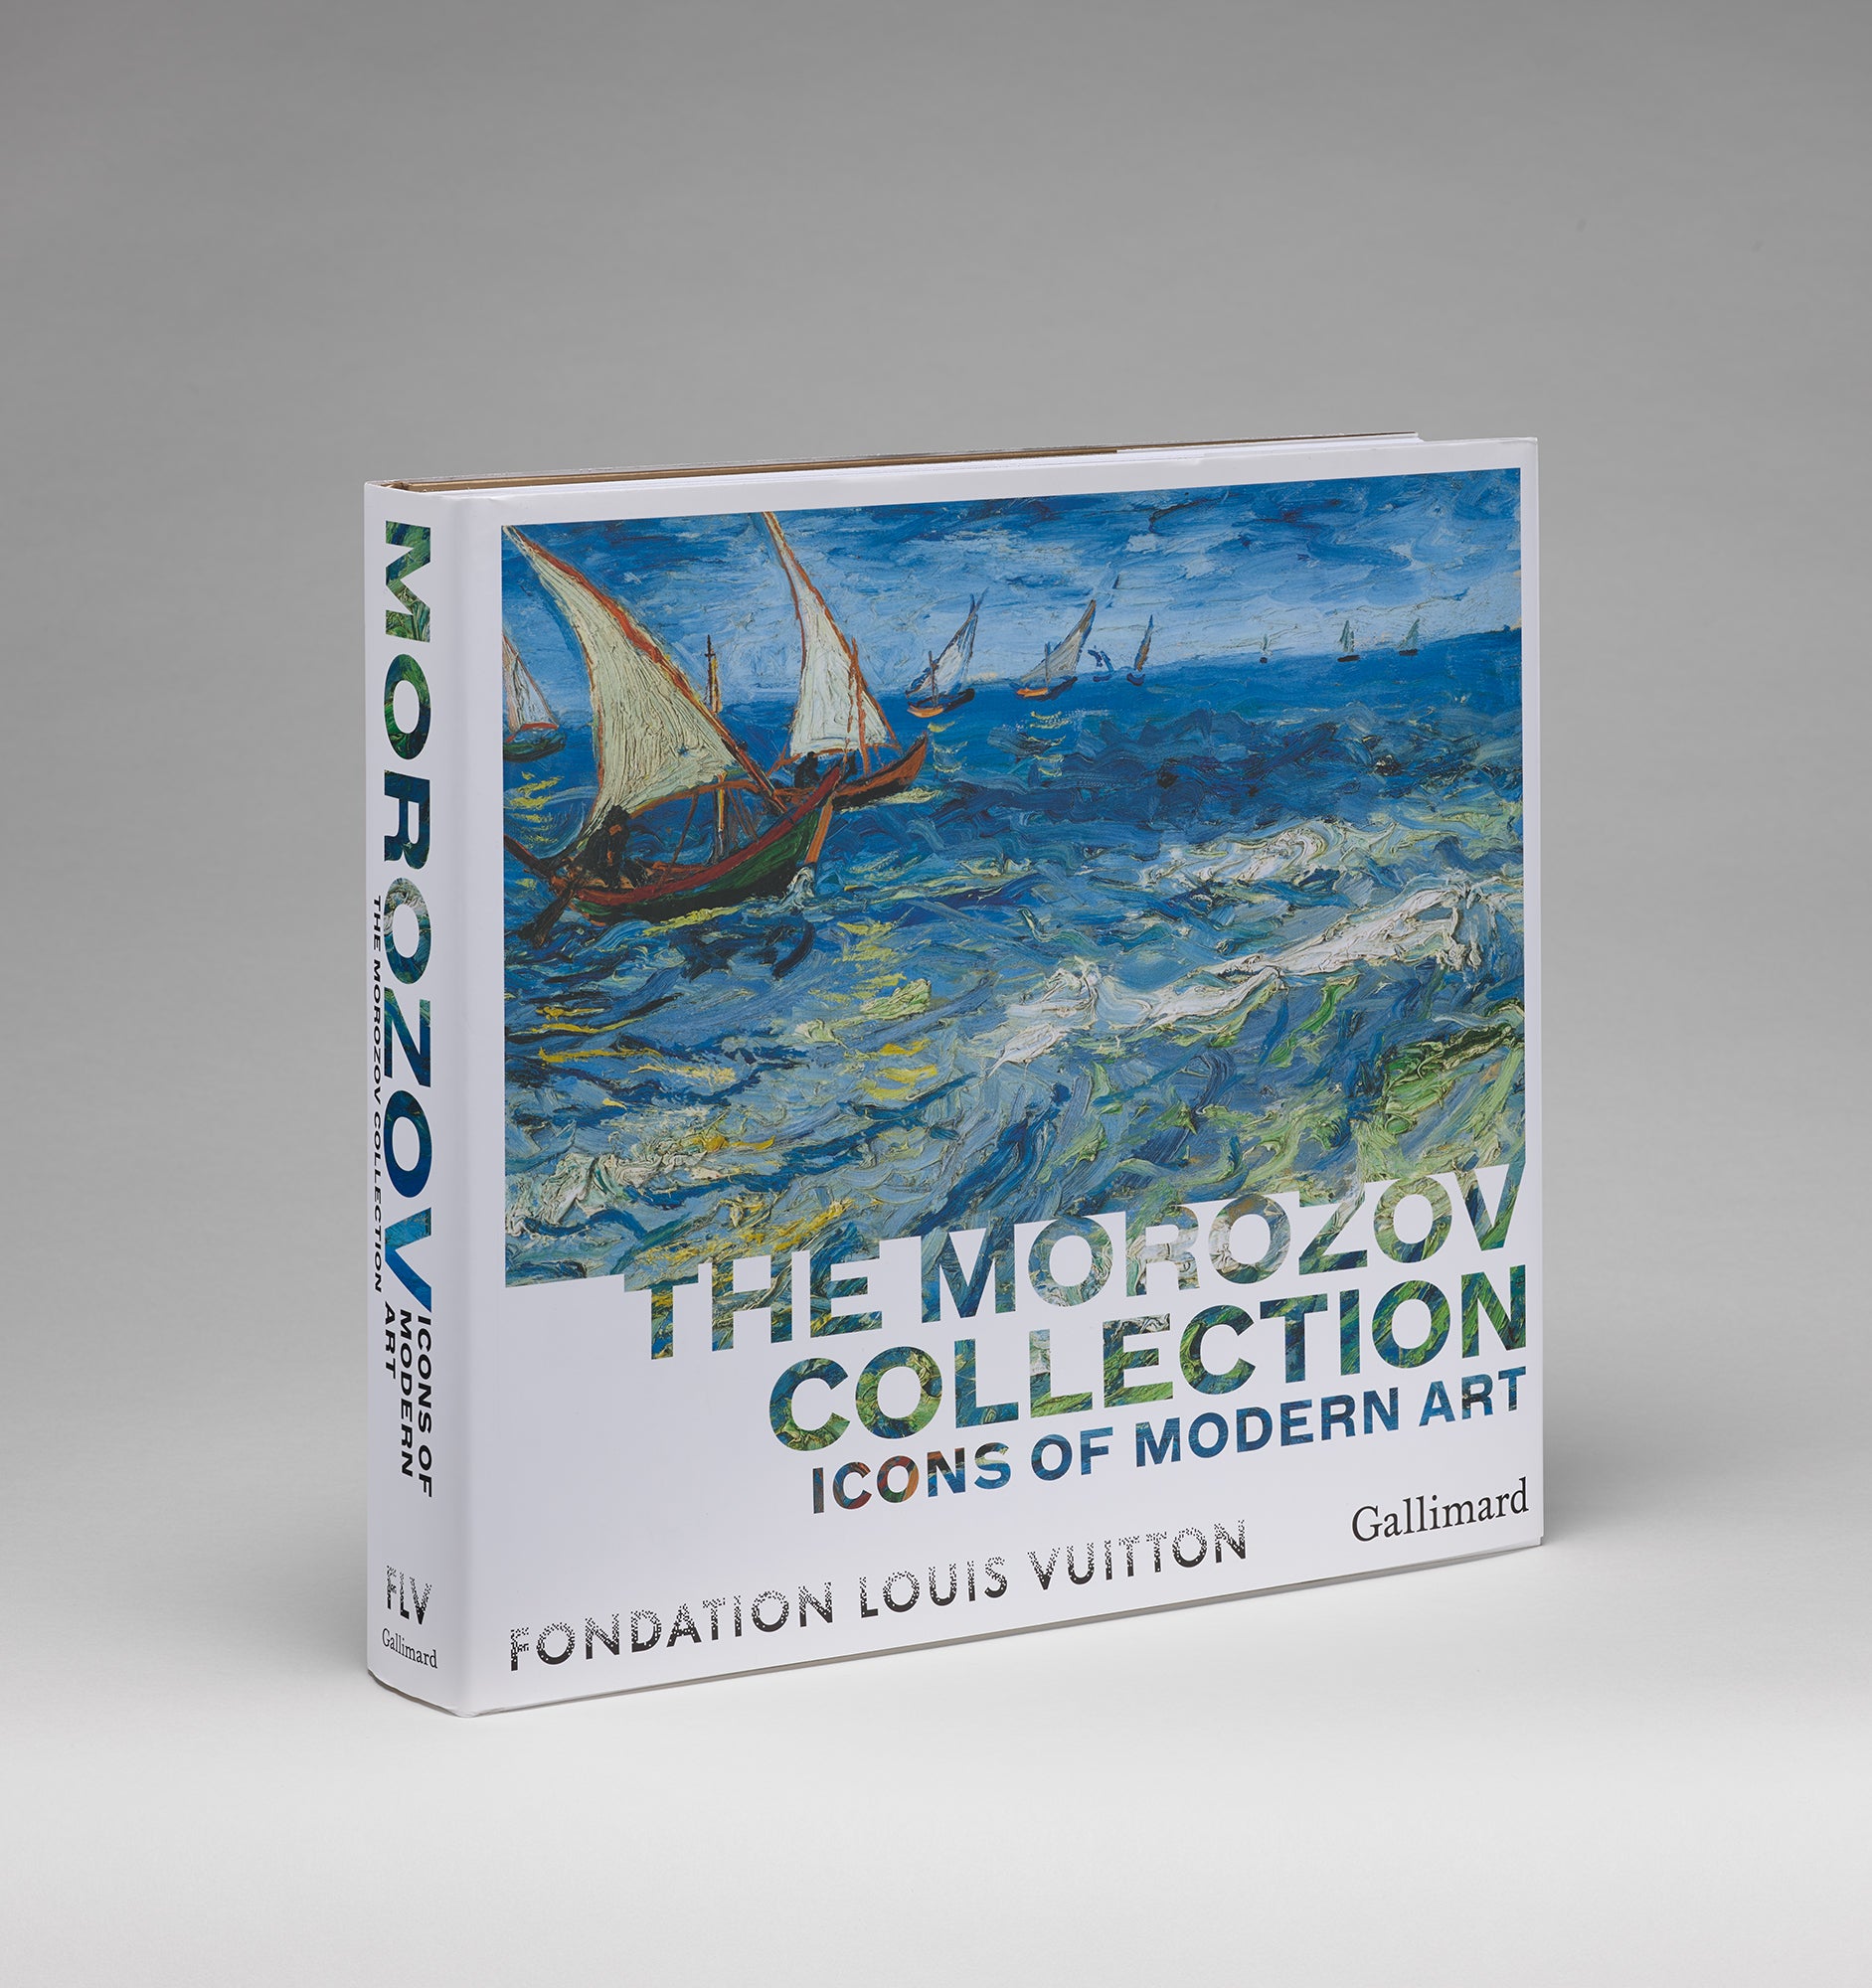 Icons of Modern Art: The Morozov collection: Baldassari, Anne